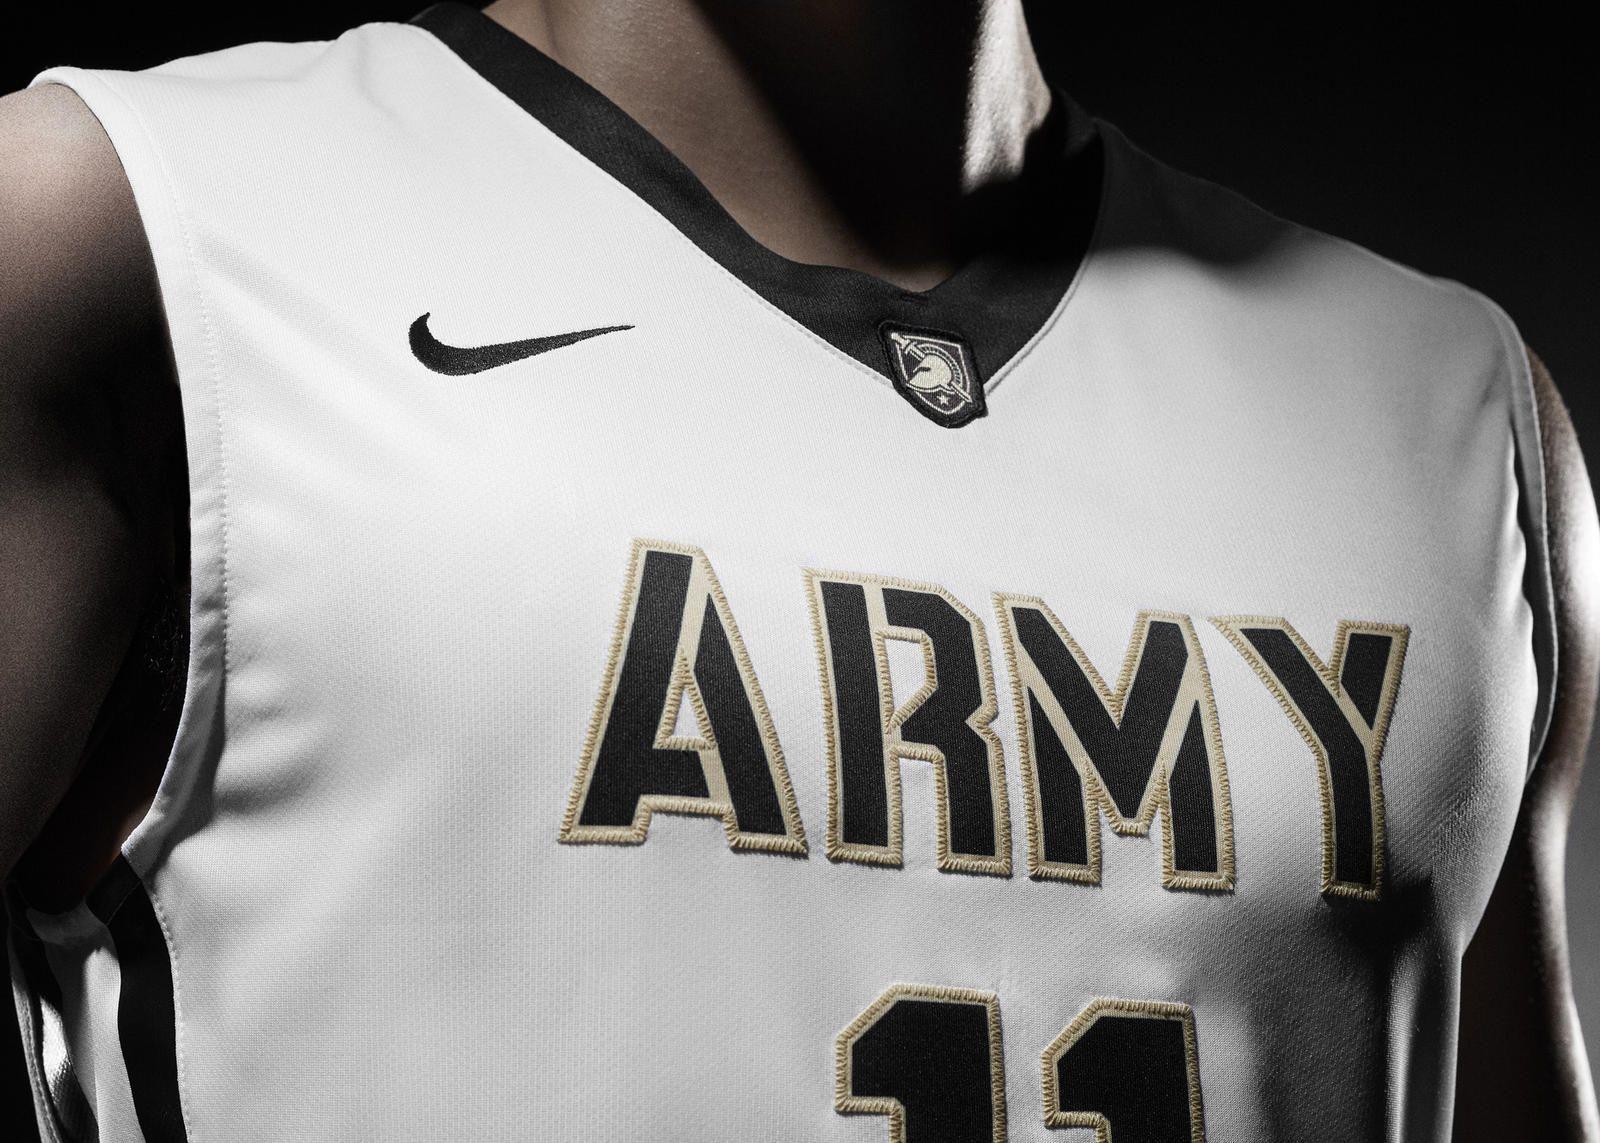 Nike Army Logo - Army West Point Evolves Its Brand Across All Athletics - Nike News